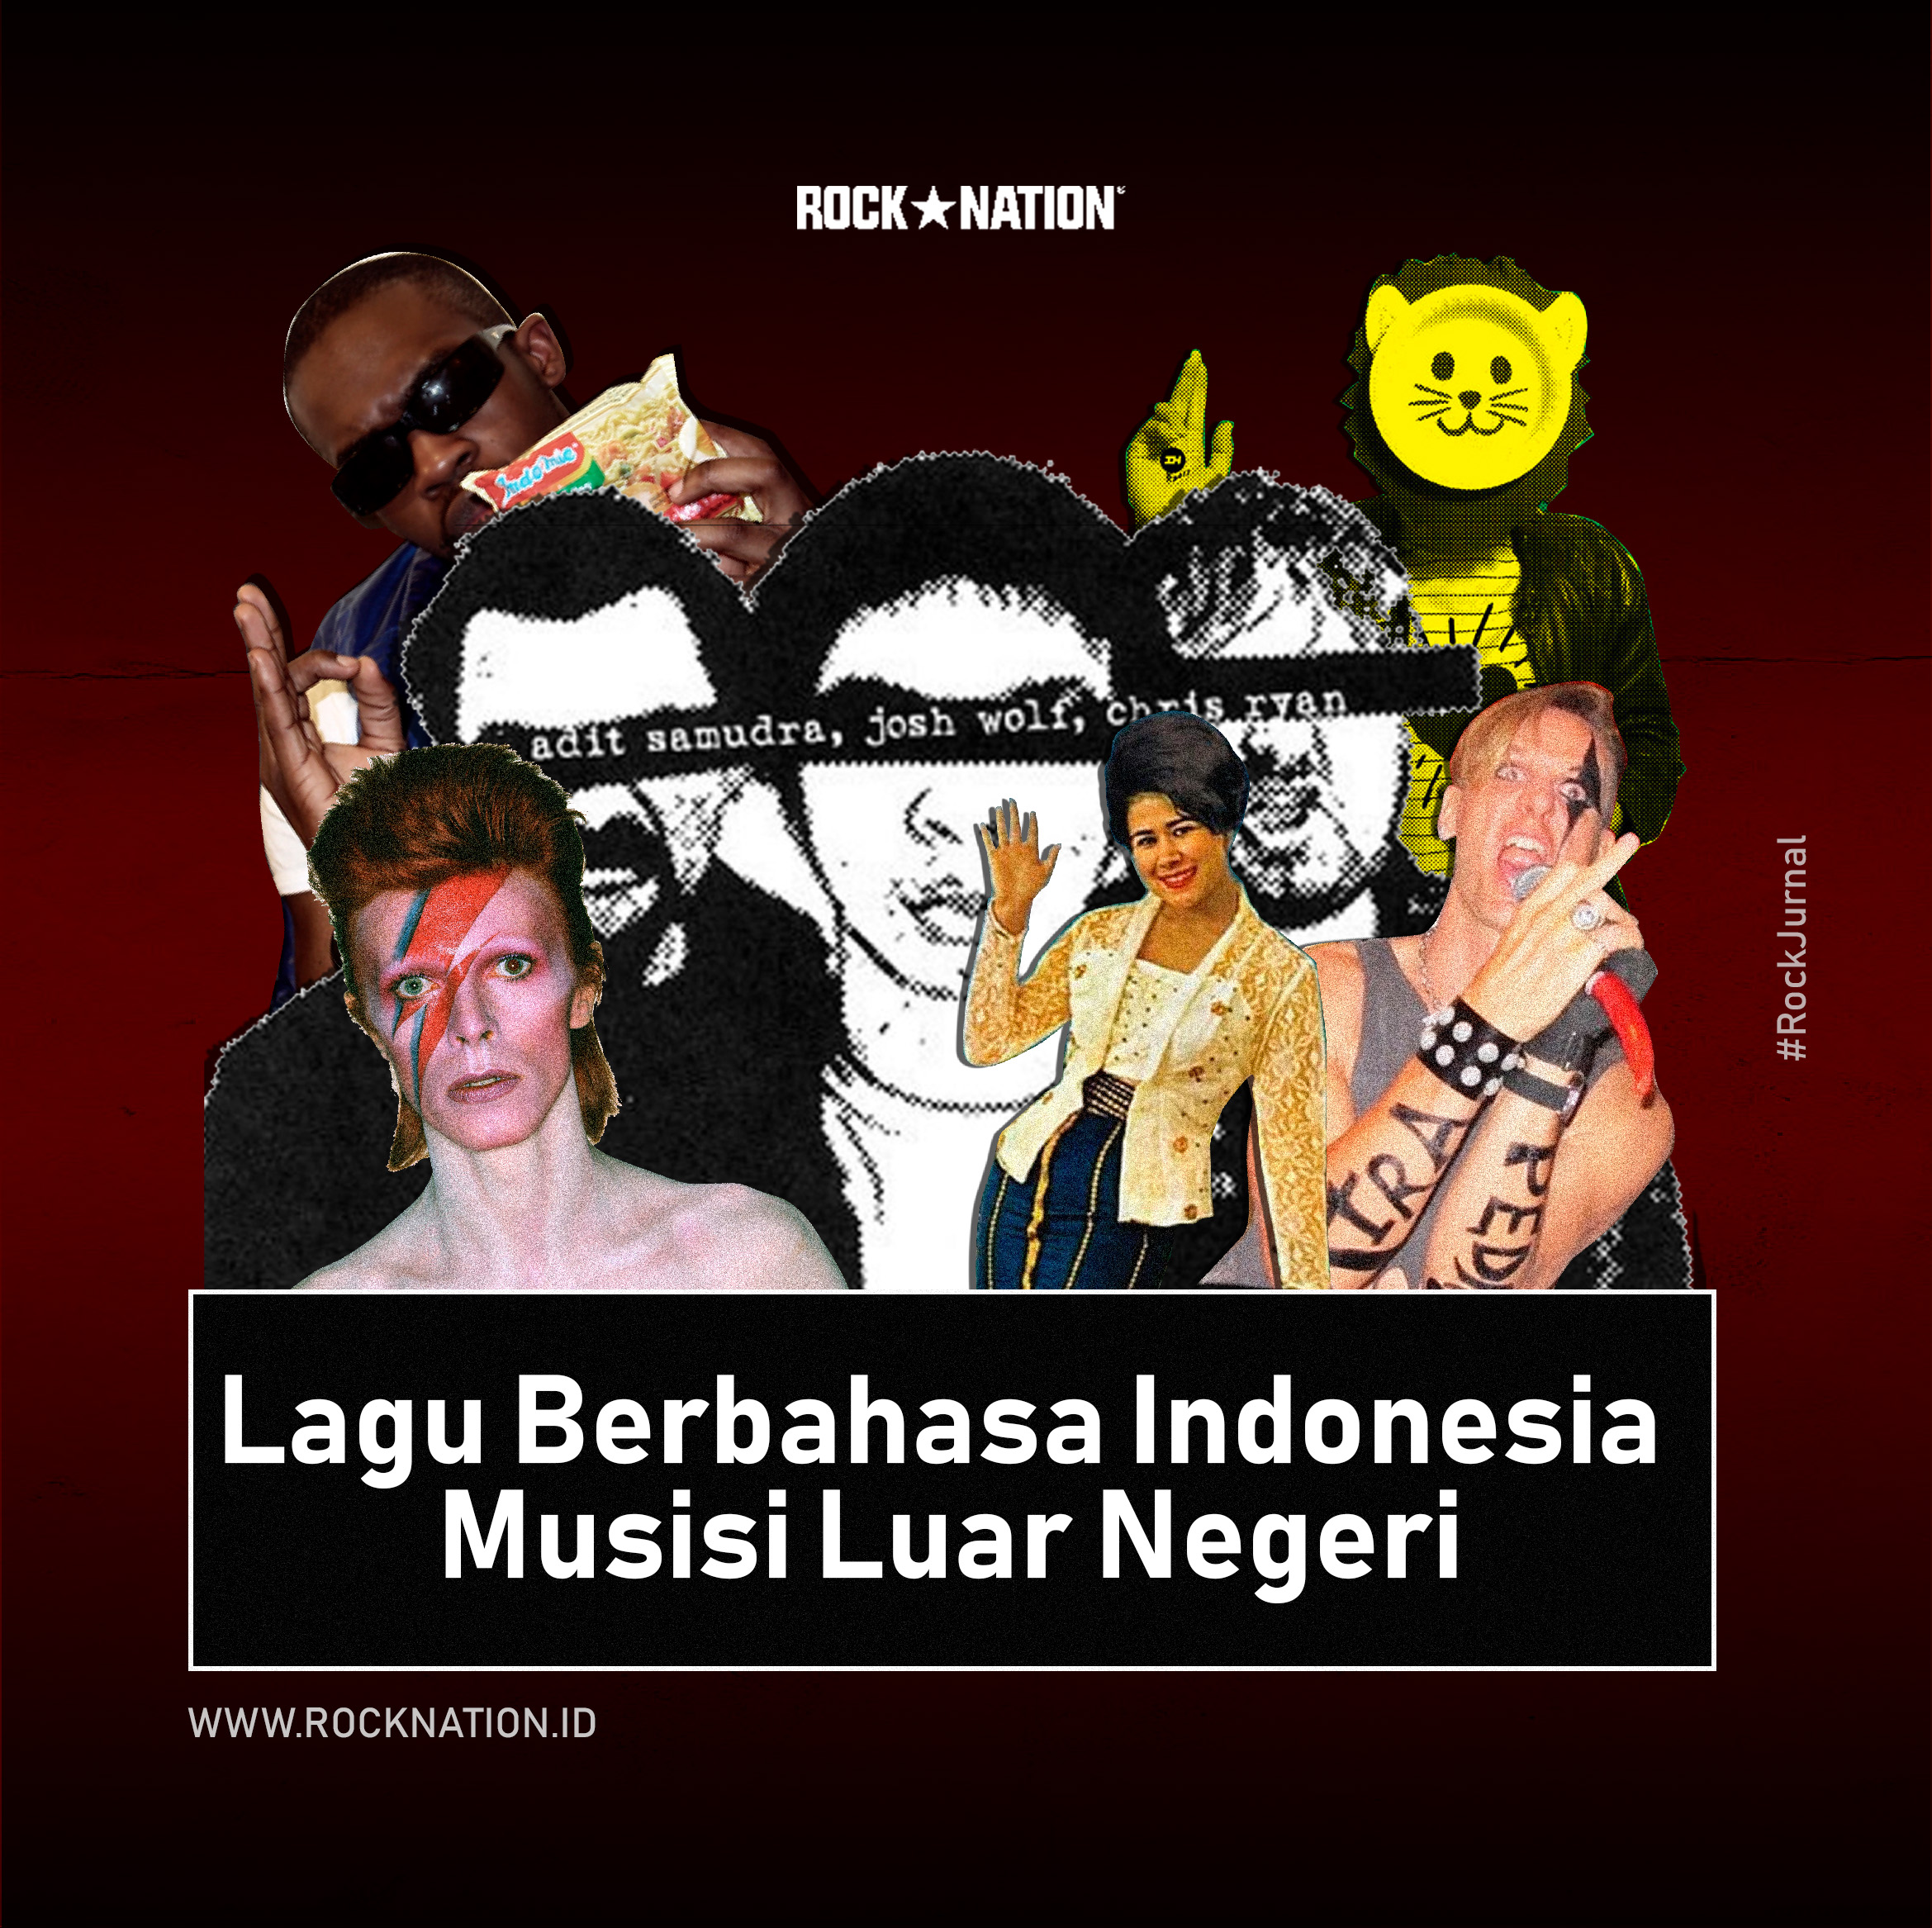 Lagu Berbahasa Indonesia Musisi Luar Negeri image